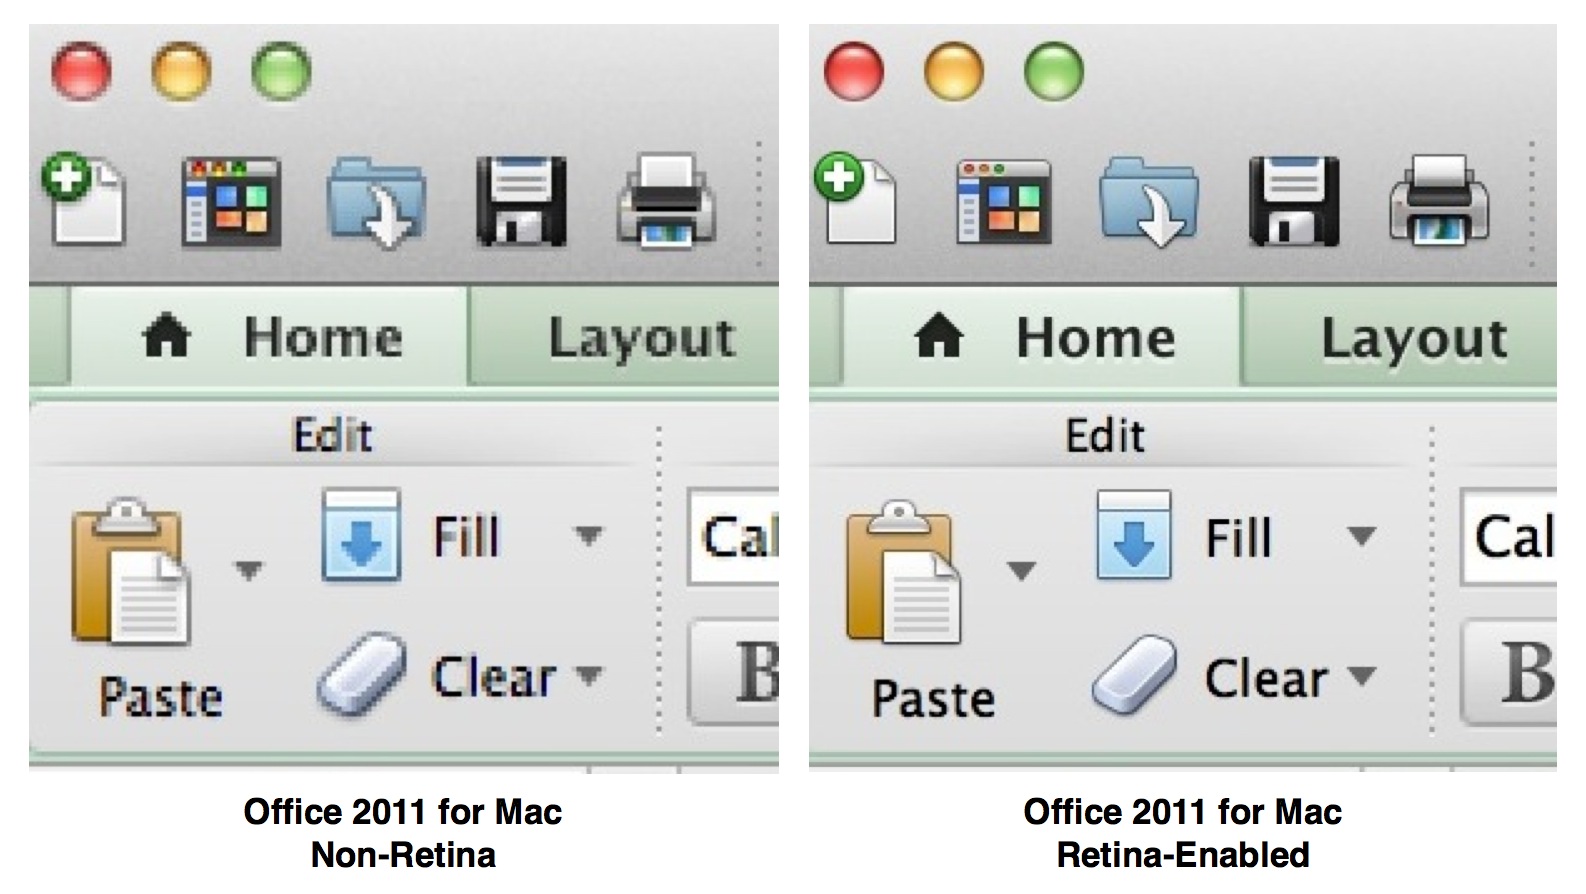 Microsoft office autoupdate mac